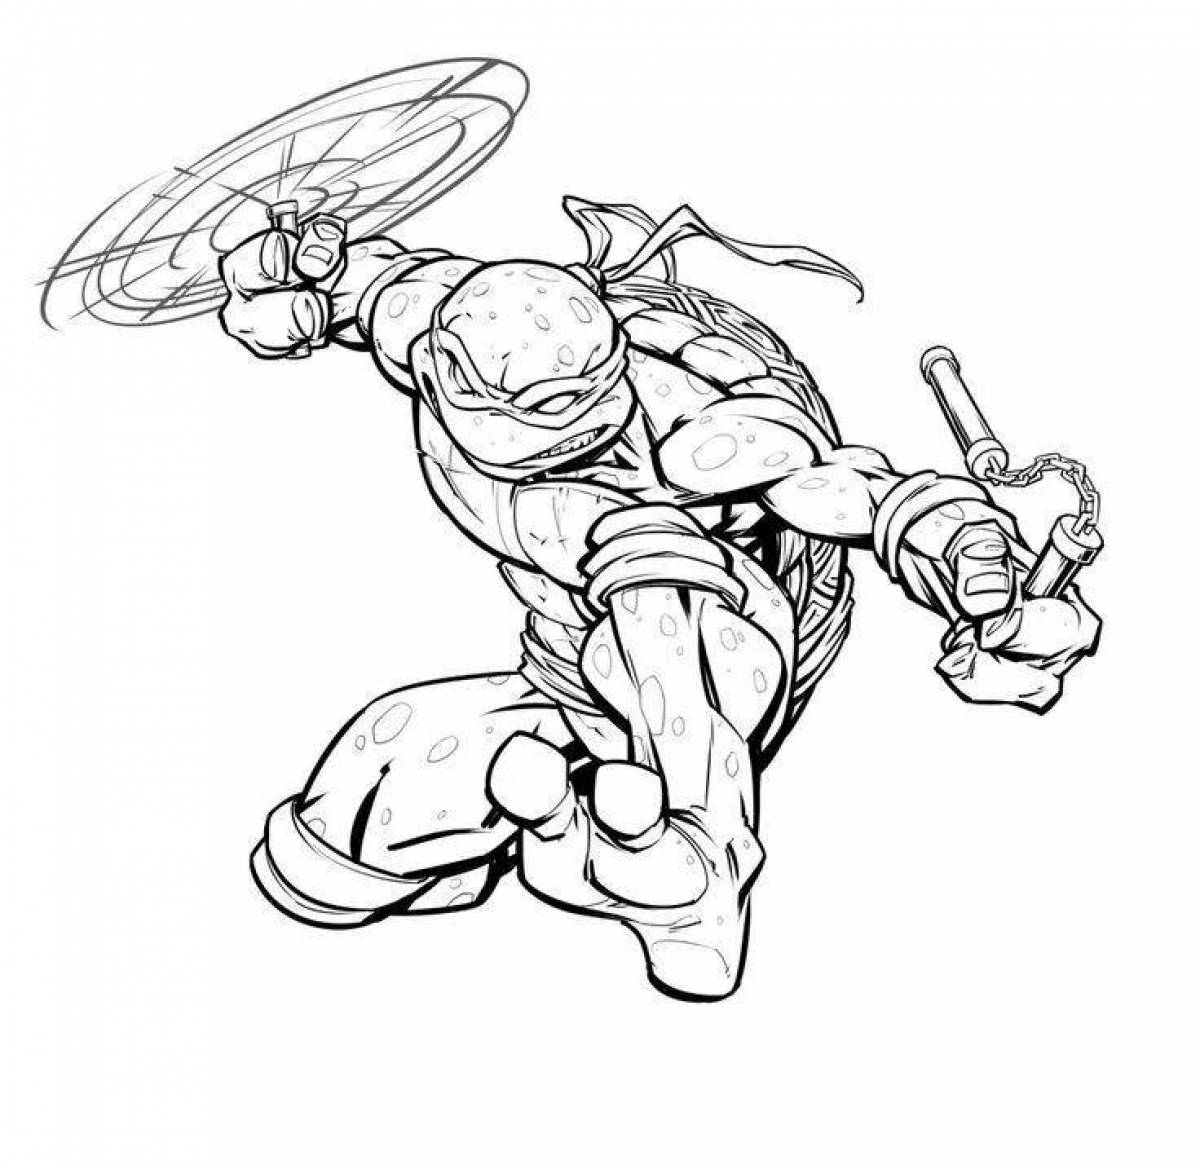 Michelangelo funny ninja turtles coloring page